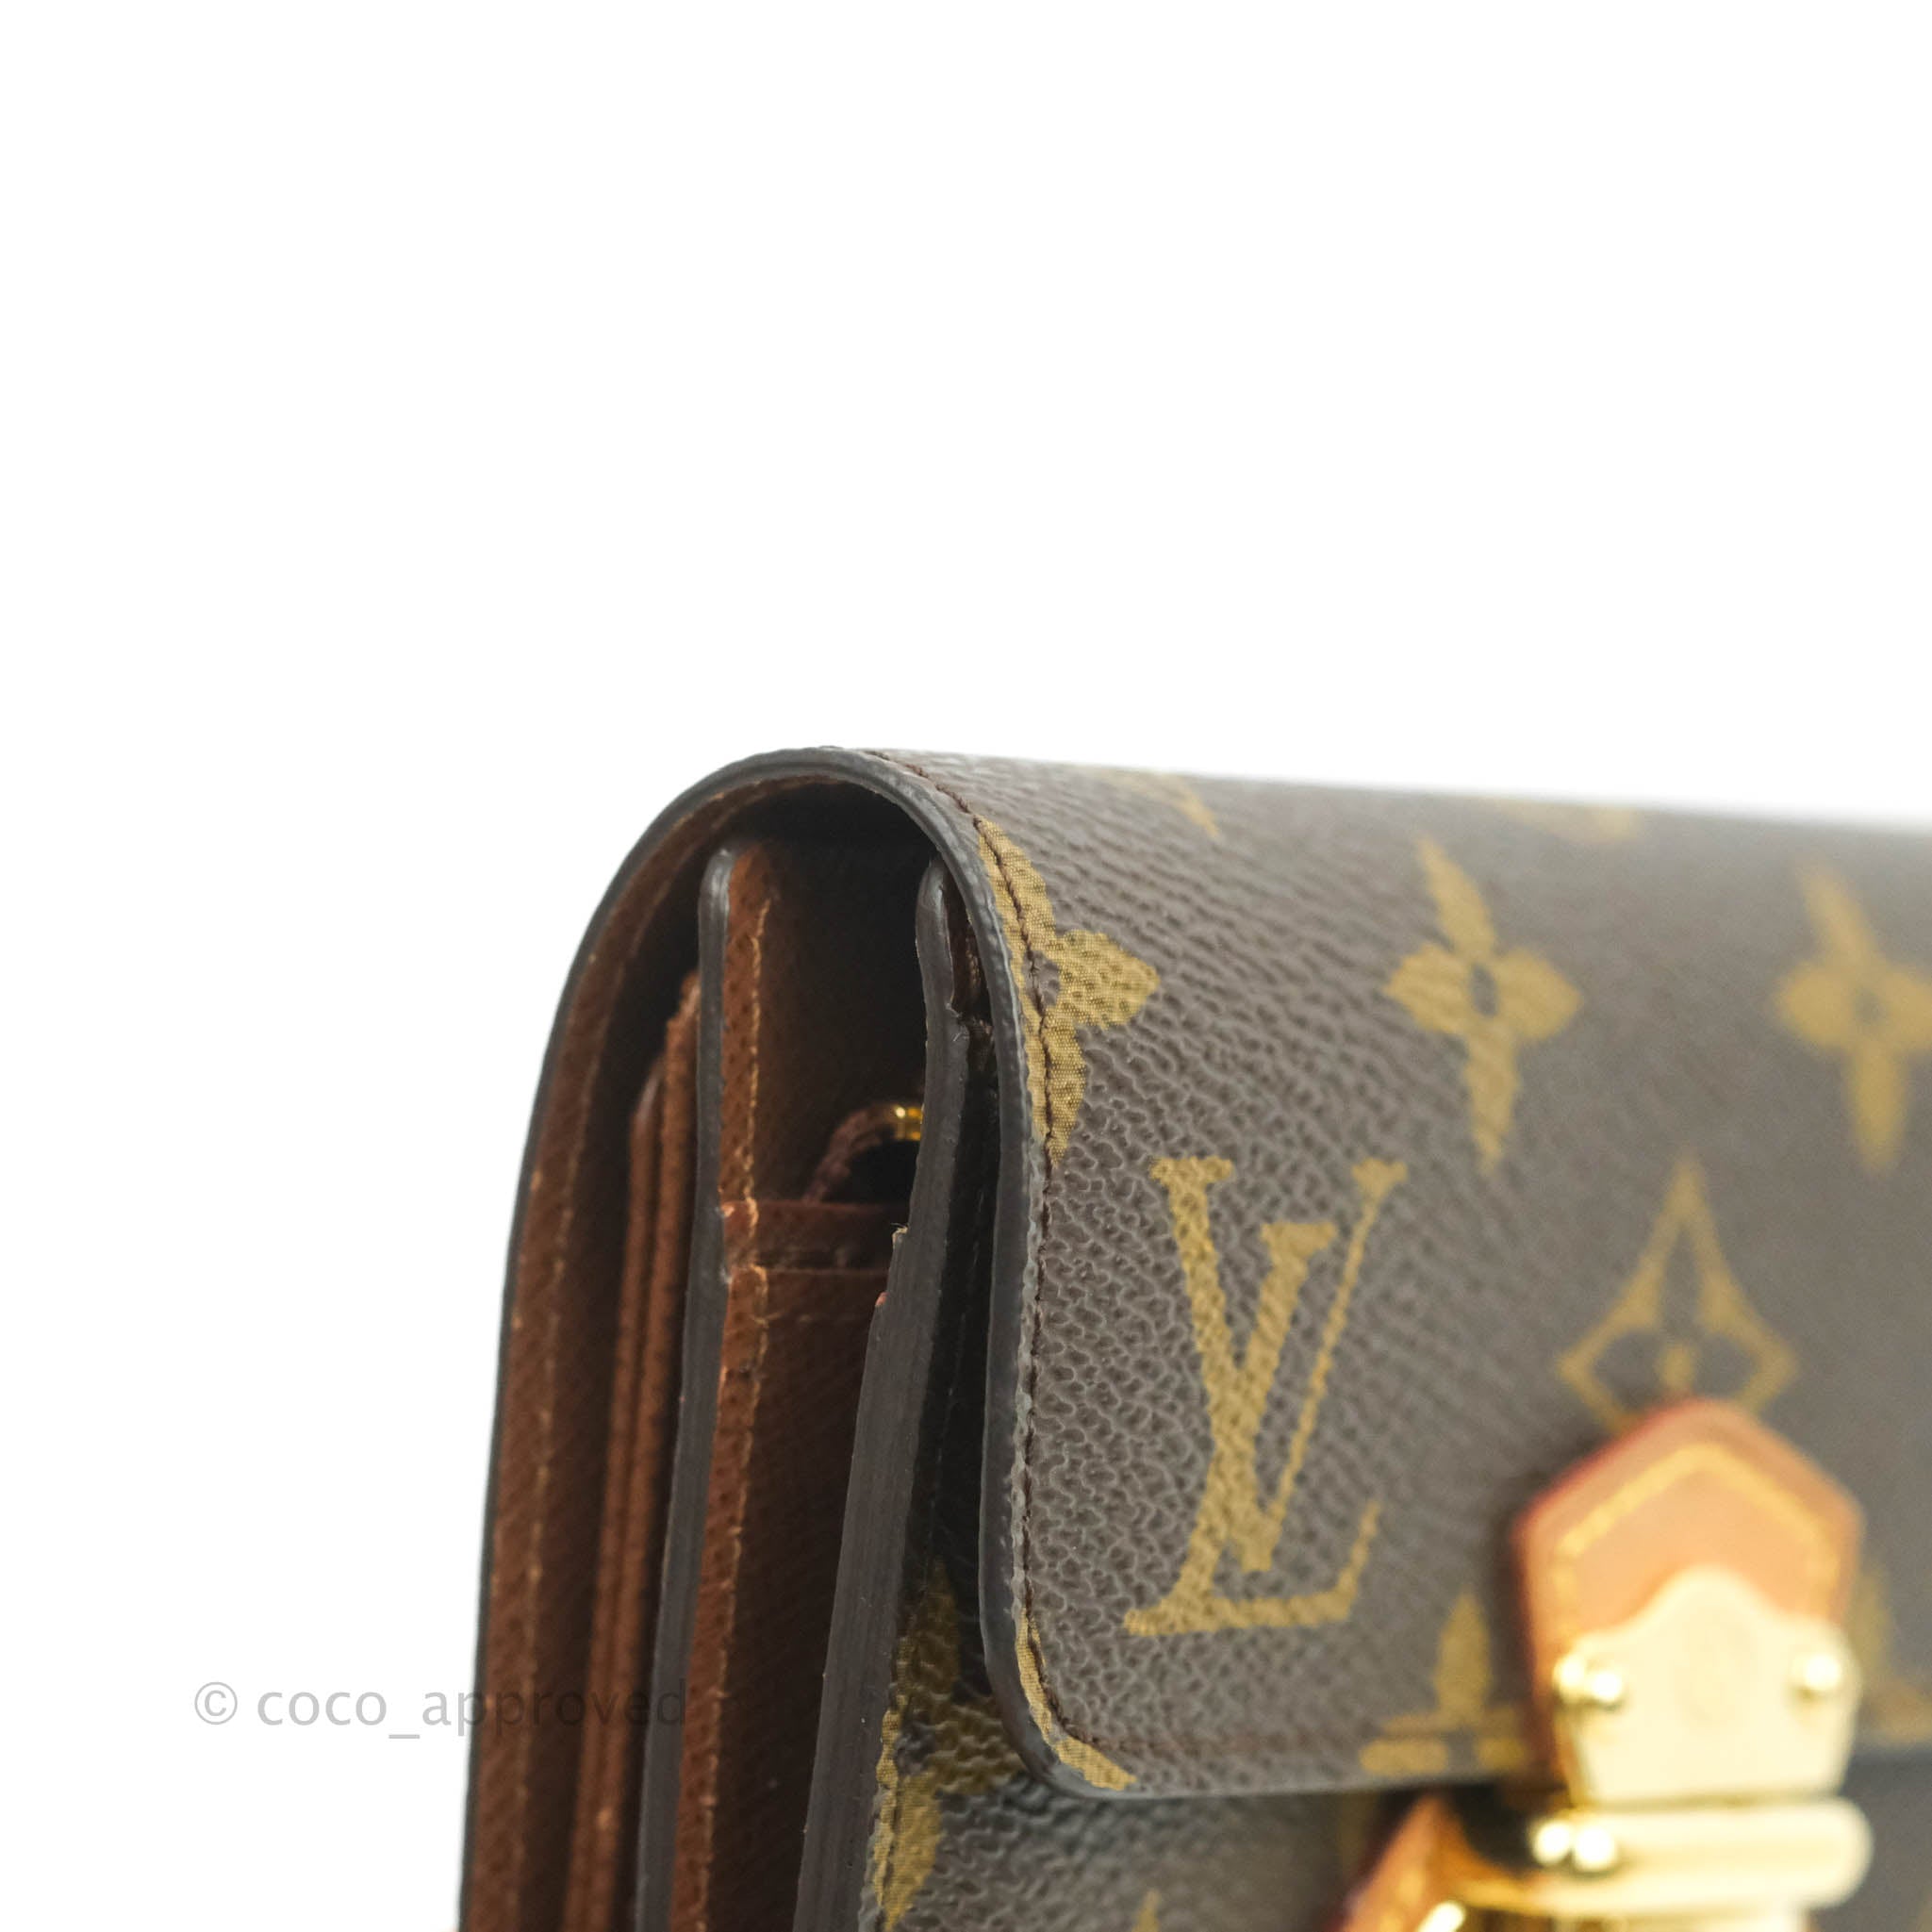 Our Louis Vuitton Monogram Pallas Wallet w/ Box Louis Vuitton line